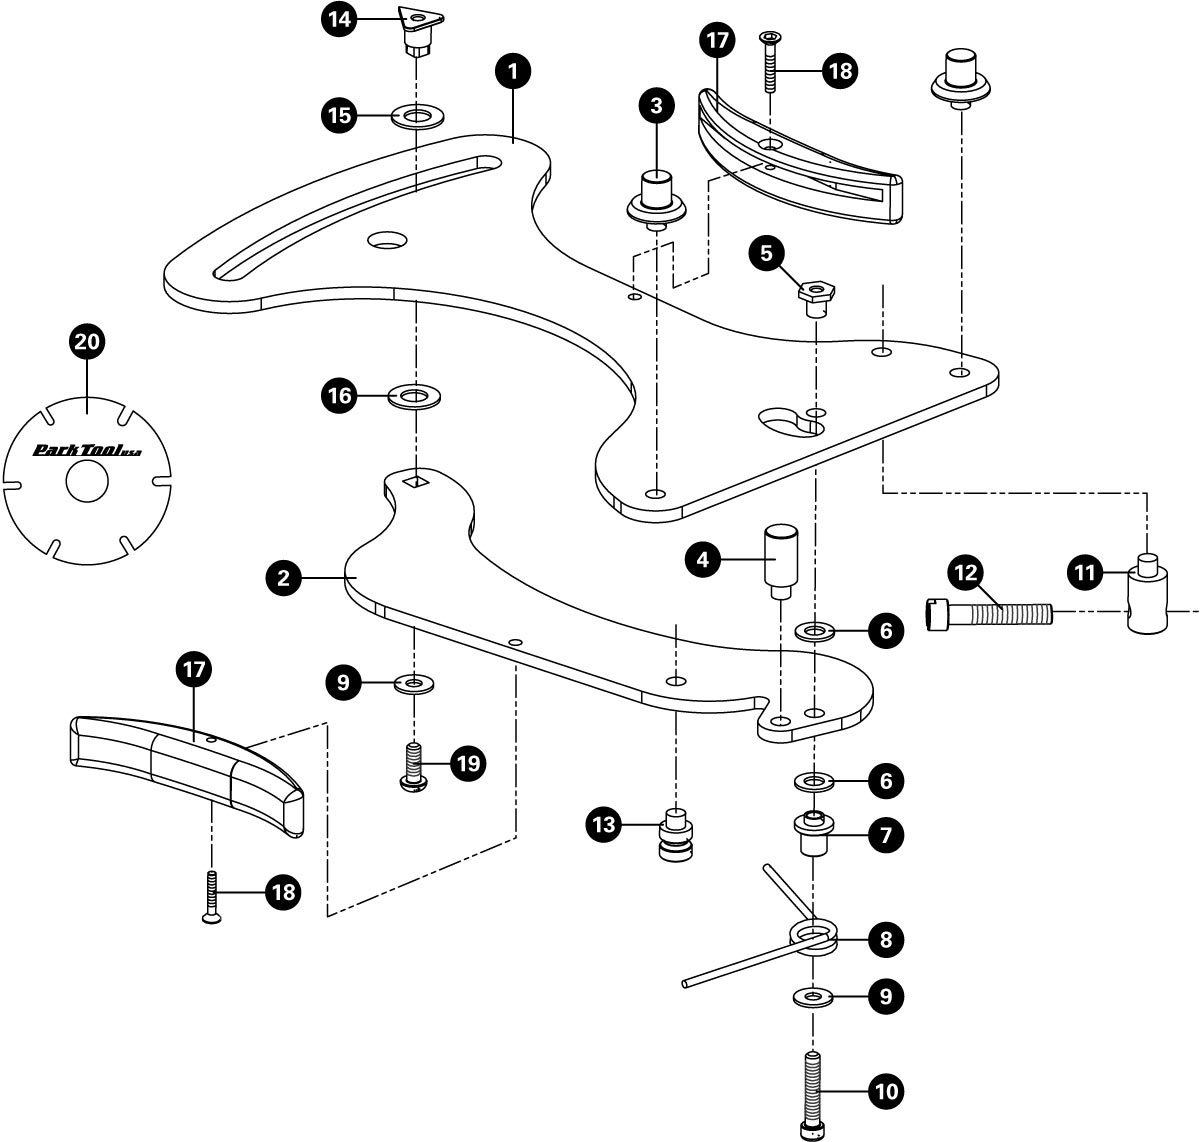 Parts diagram for TM-1 Spoke Tension Meter, click to enlarge